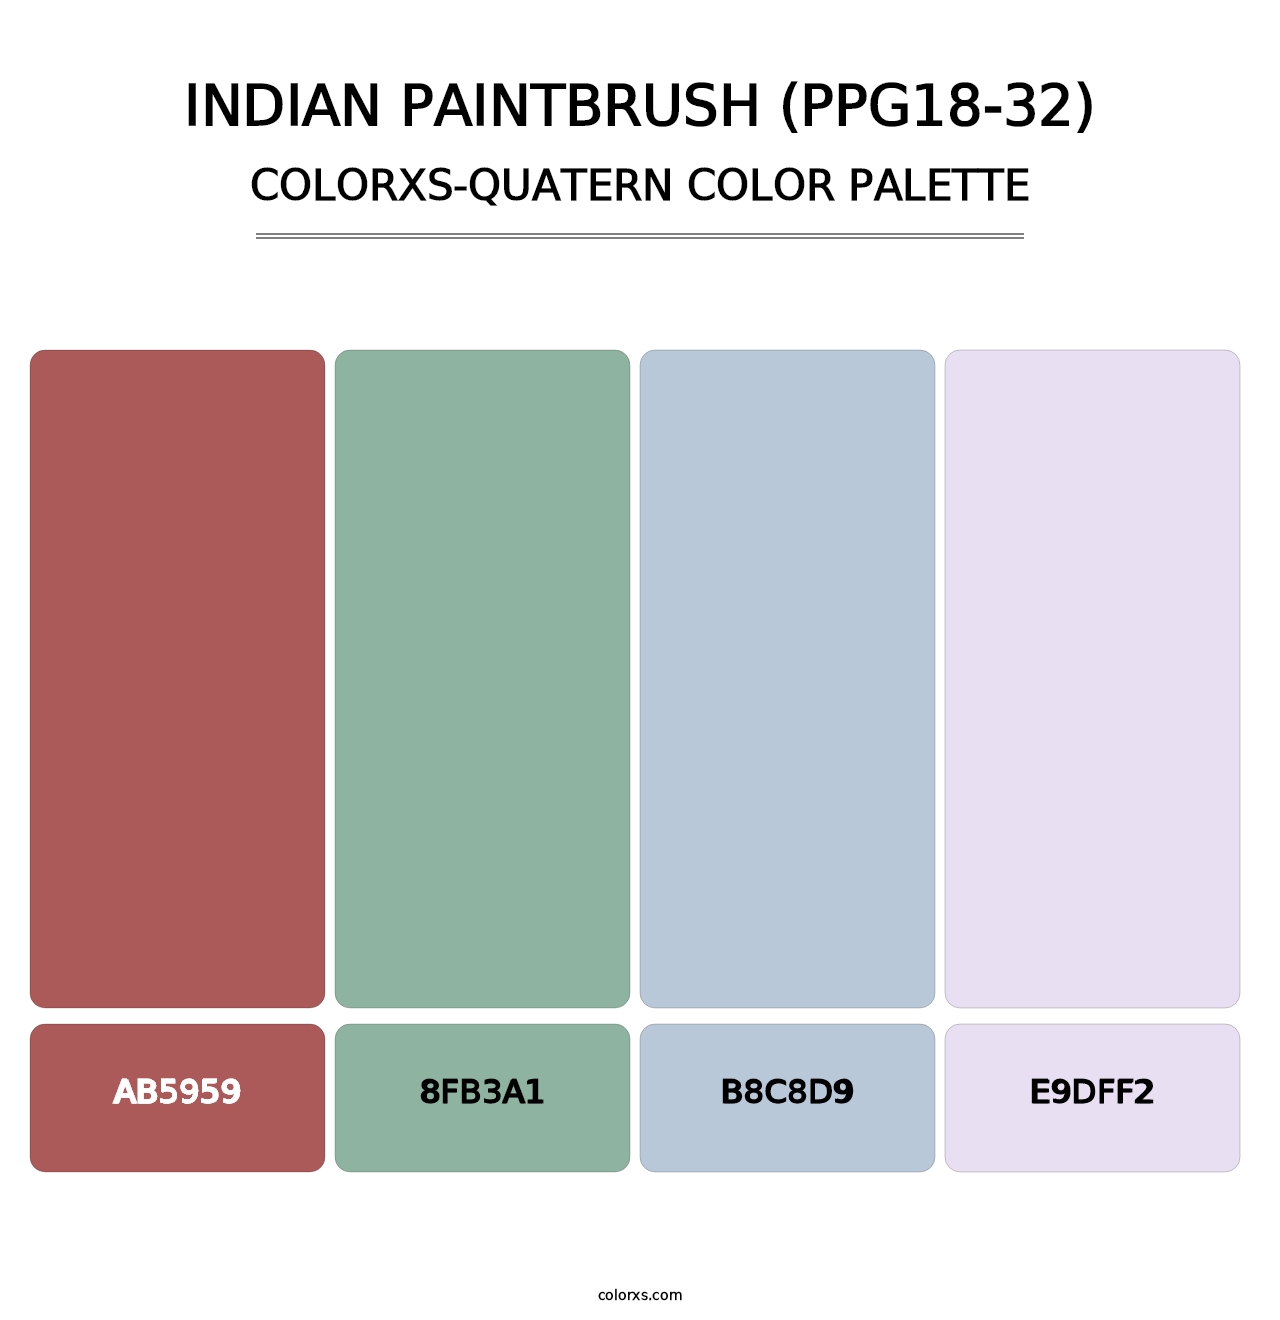 Indian Paintbrush (PPG18-32) - Colorxs Quatern Palette